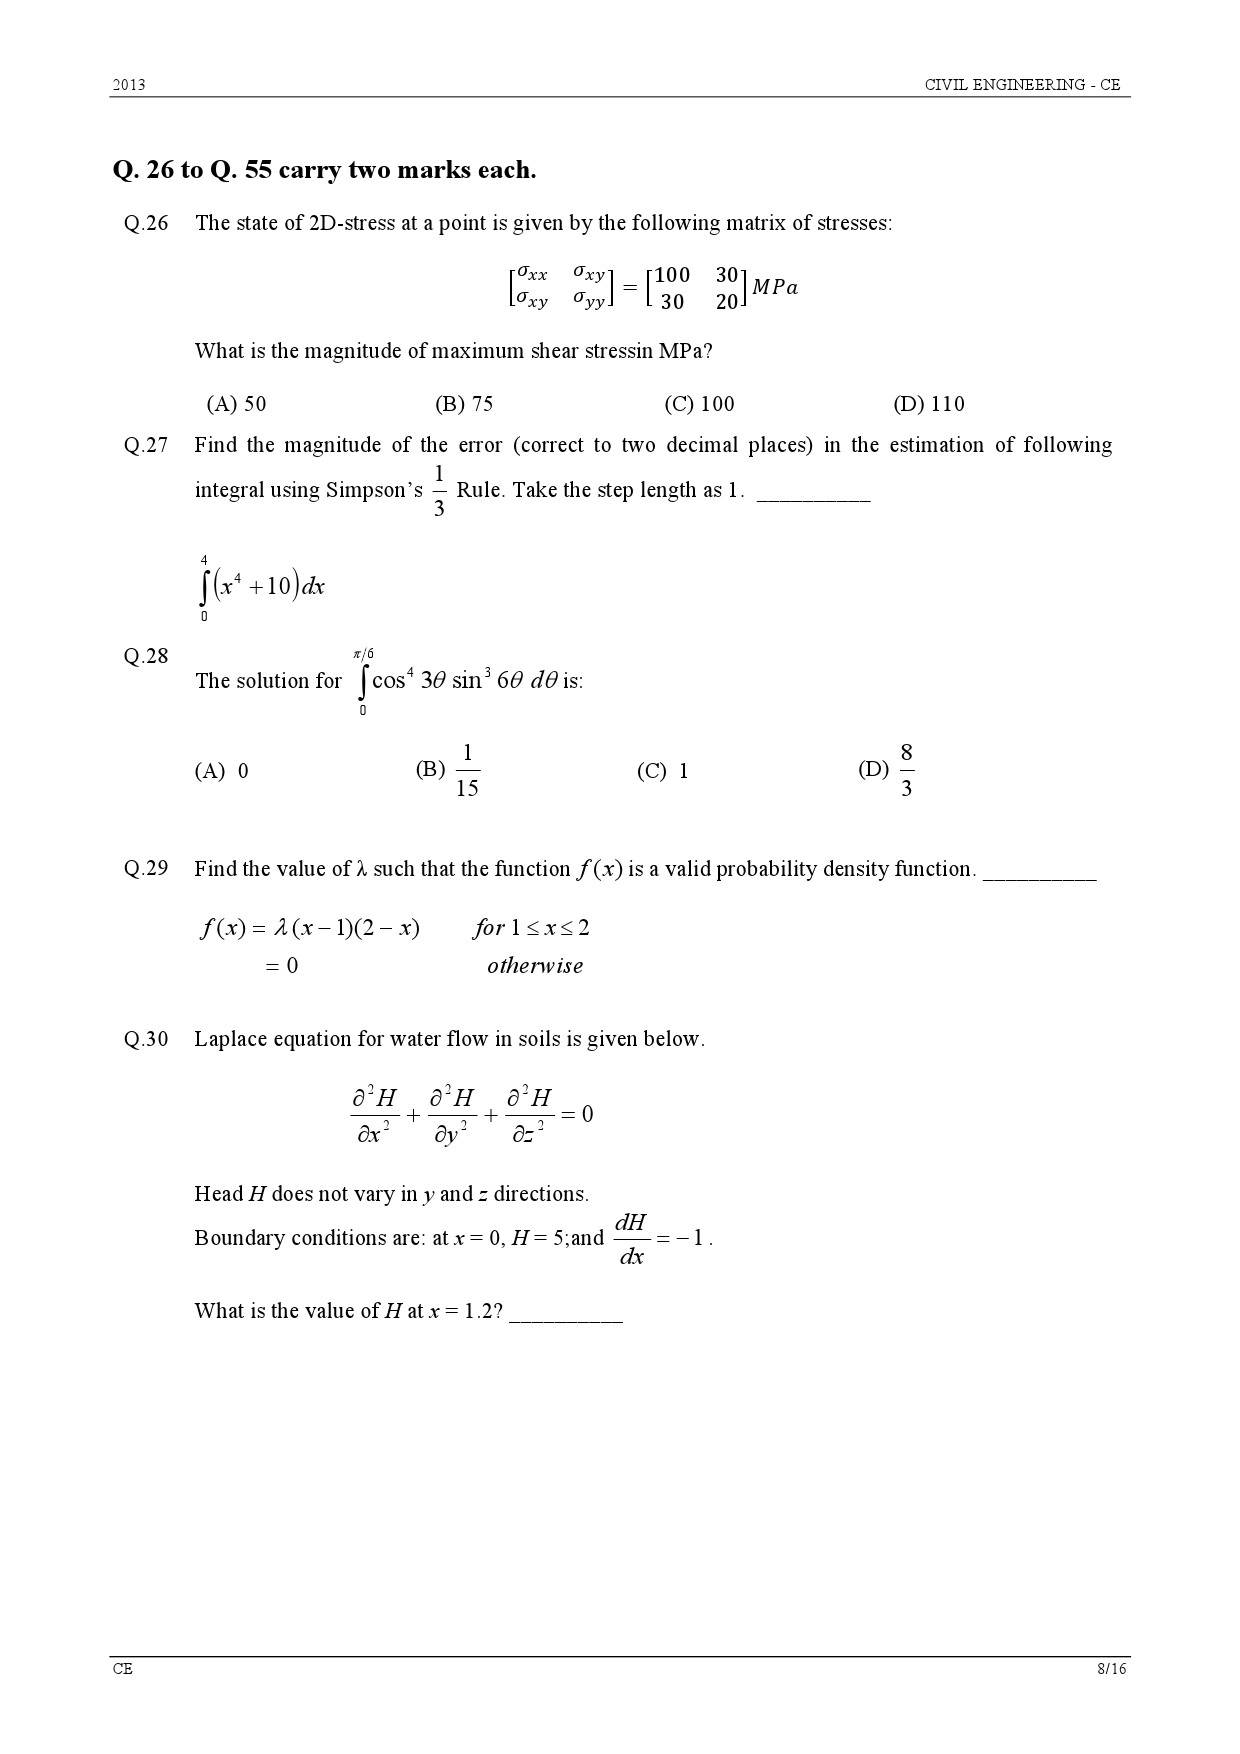 GATE Exam Question Paper 2013 Civil Engineering 8